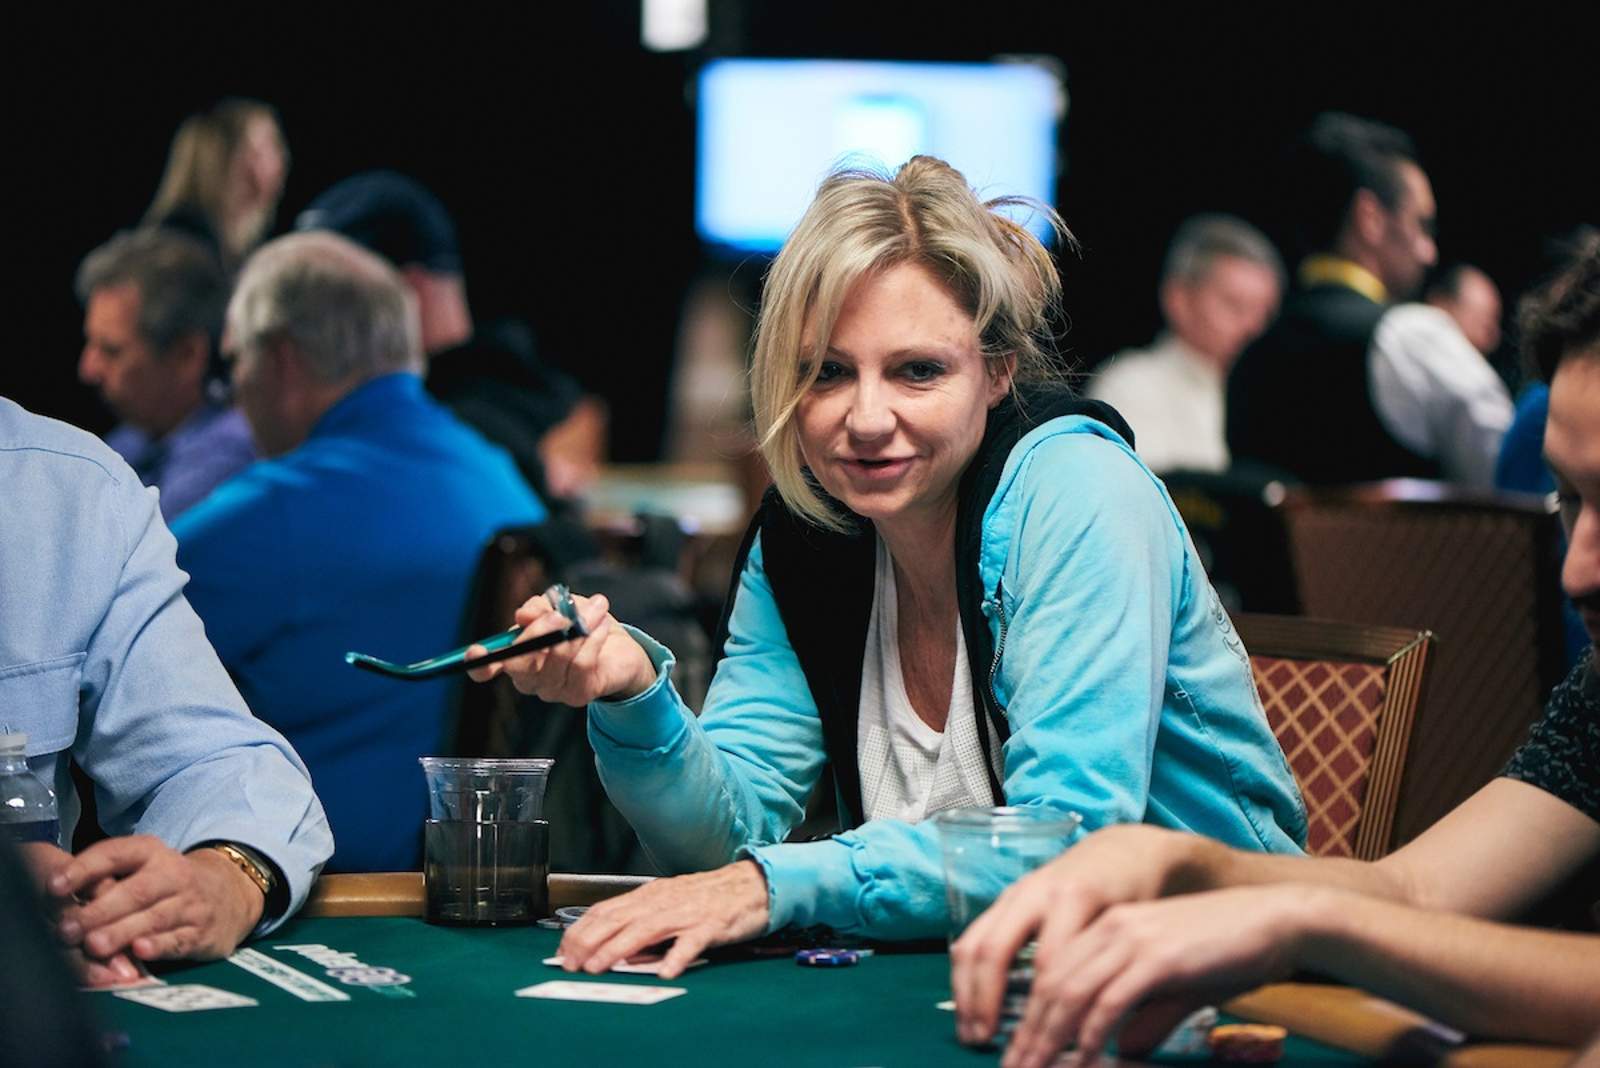 Pokerography: The Life of Hall of Famer Jennifer Harman